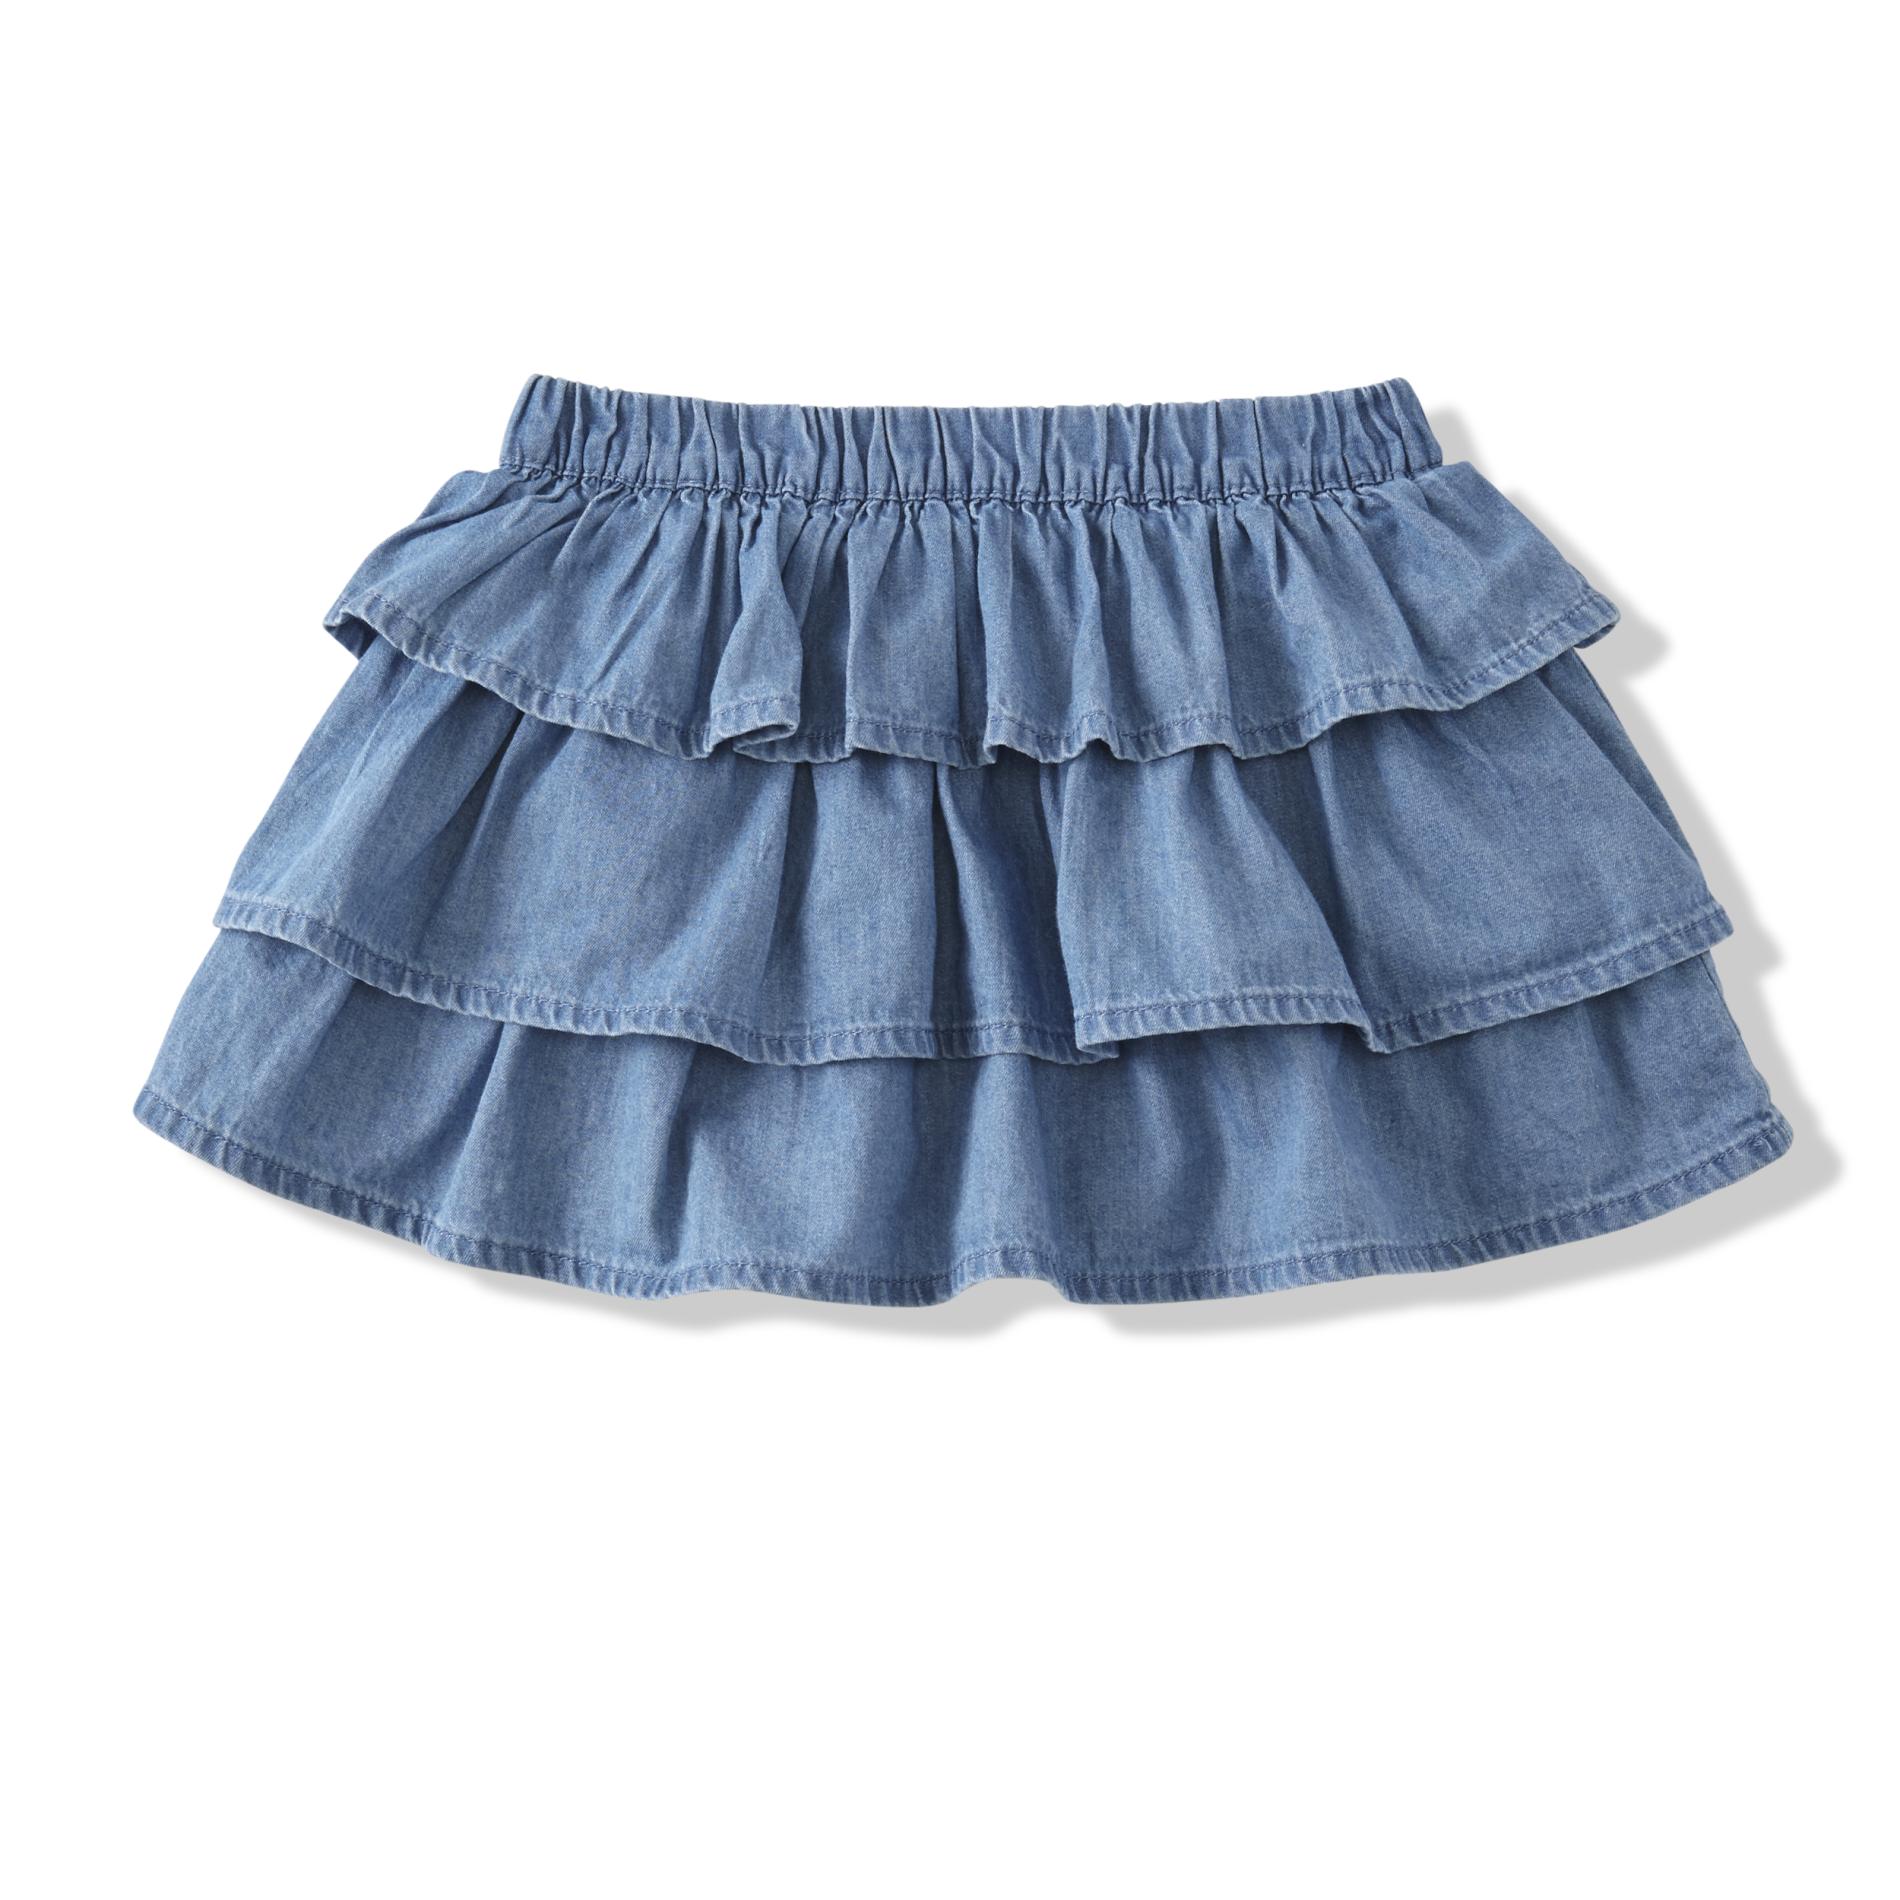 Toughskins Toddler & Infant Girls' Tiered Chambray Skirt